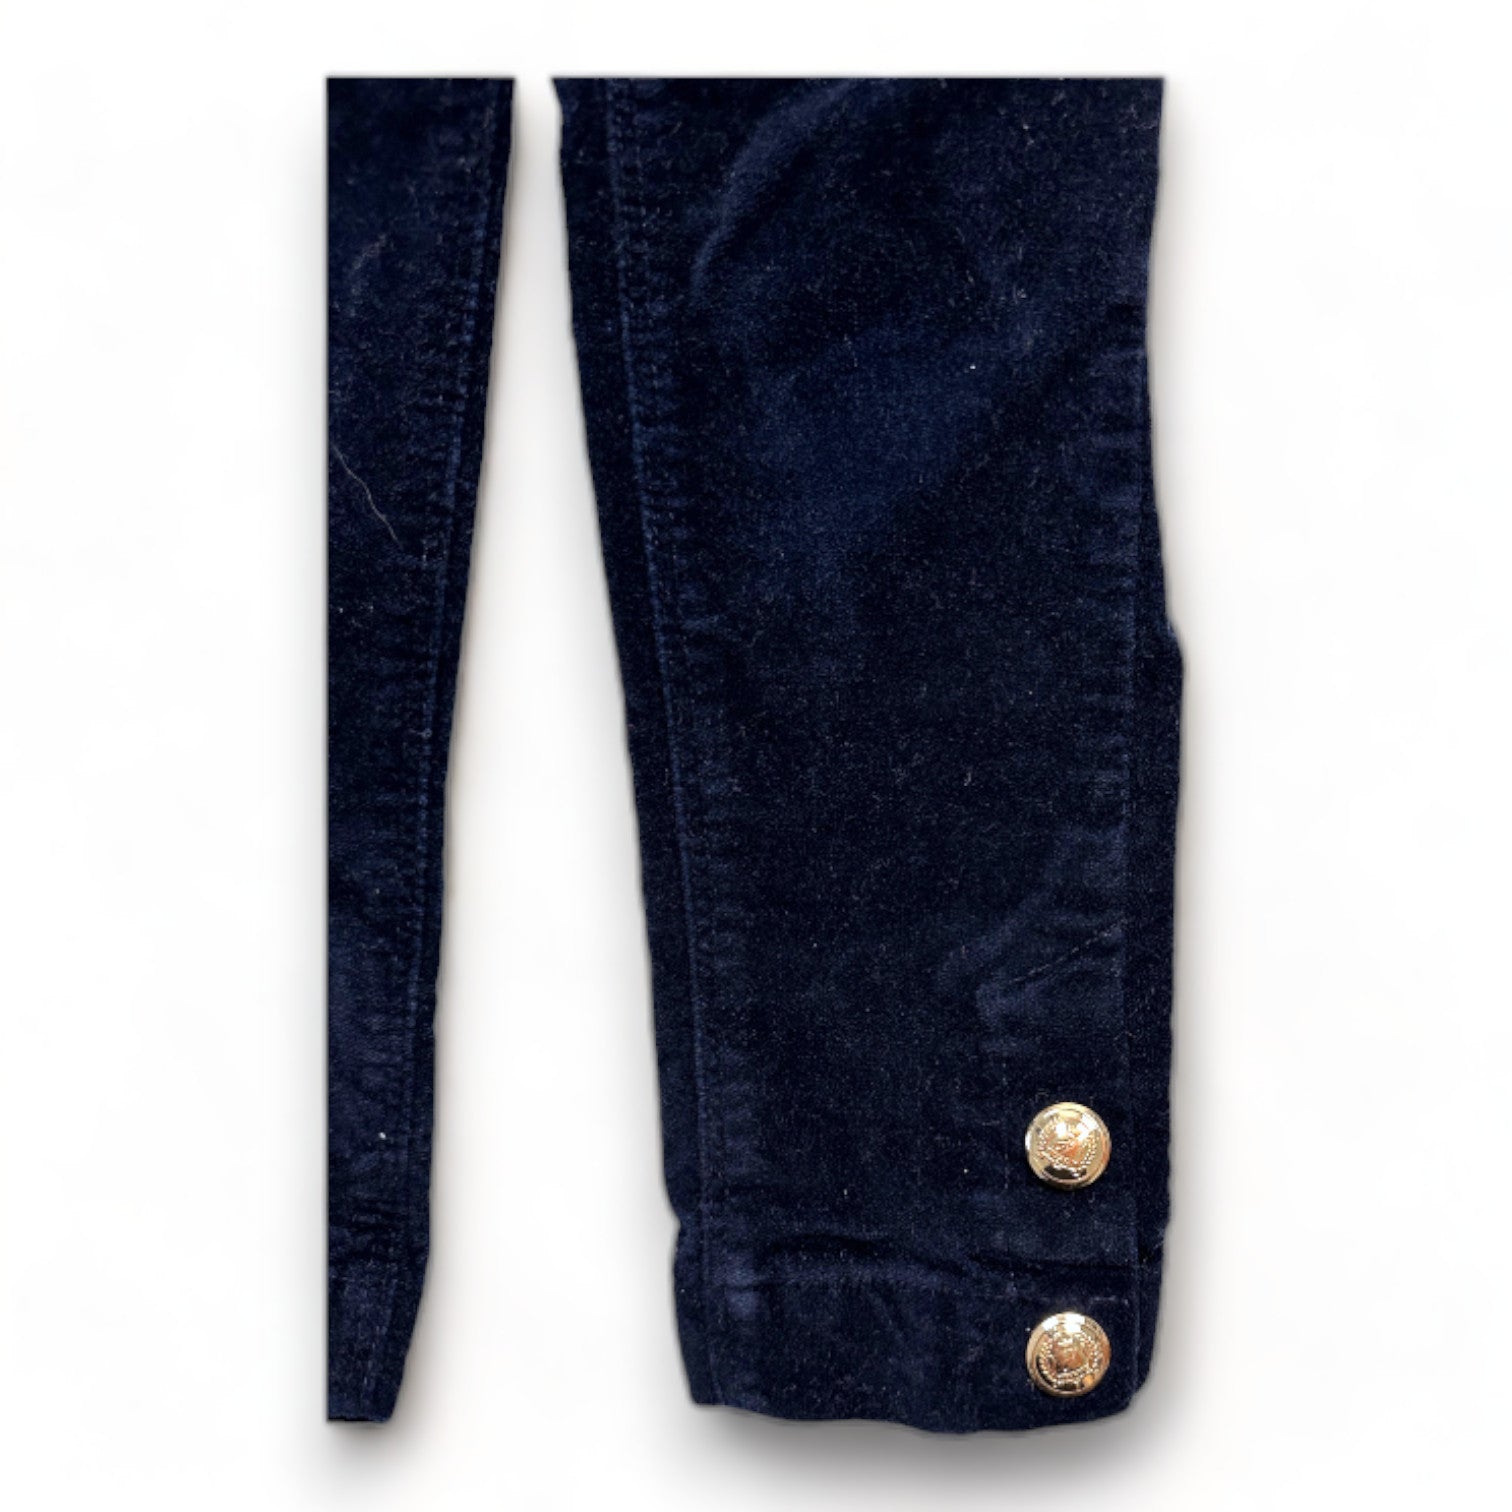 JACADI - Pantalon en velours bleu marine avec boutons en or - 3 ans